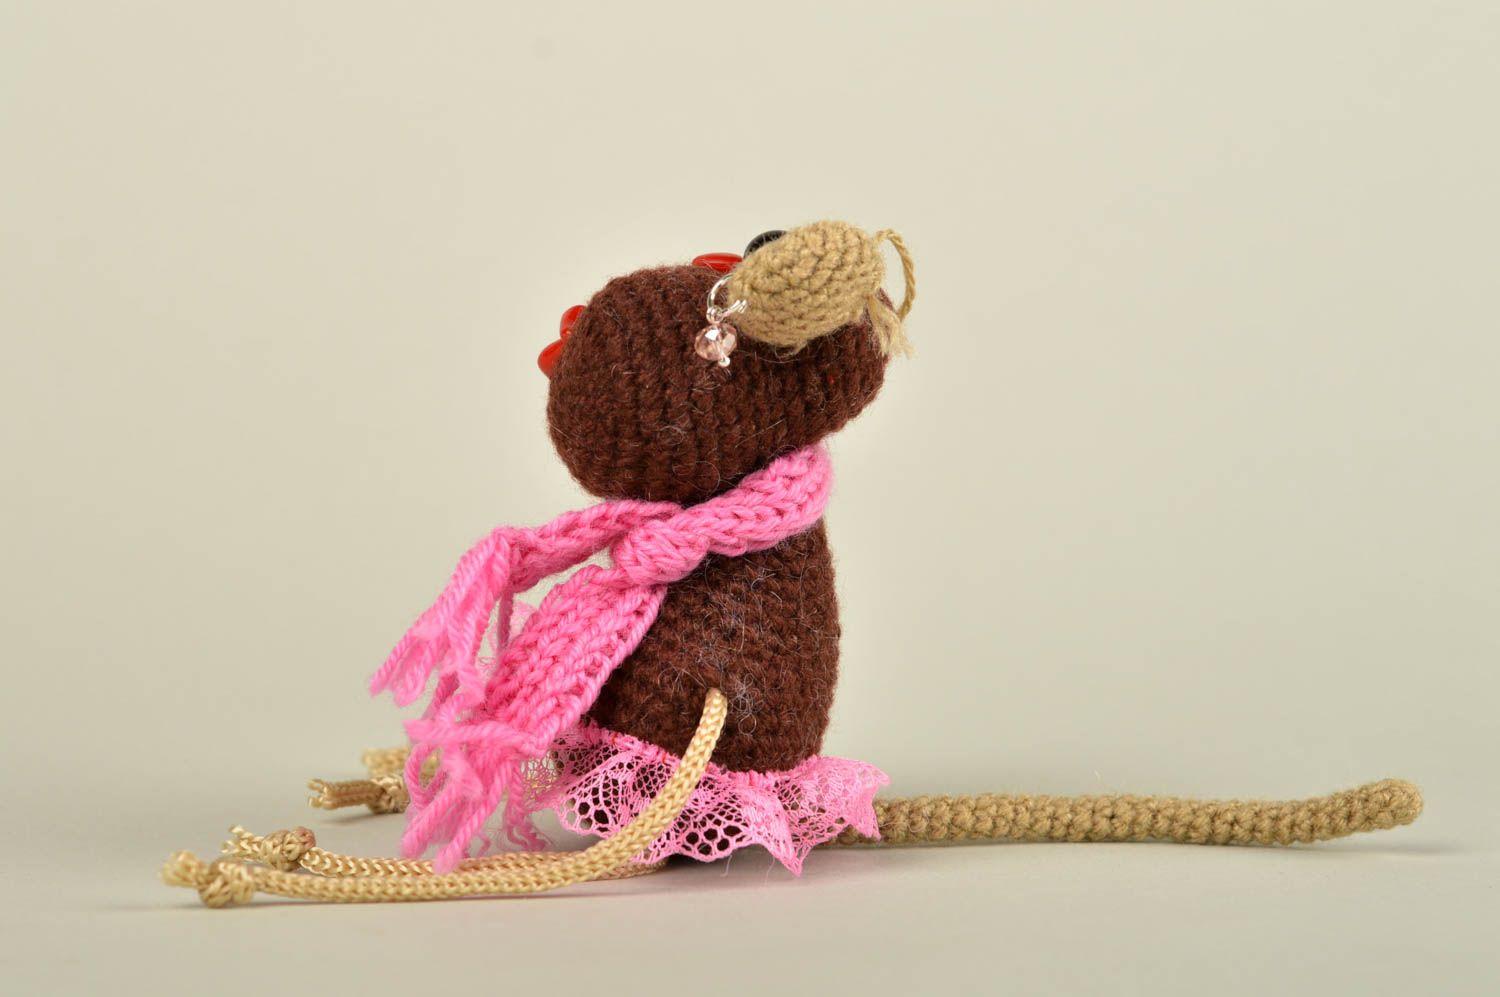 Hand-crocheted creative toy handmade stylish toy for babies nursery decor photo 3